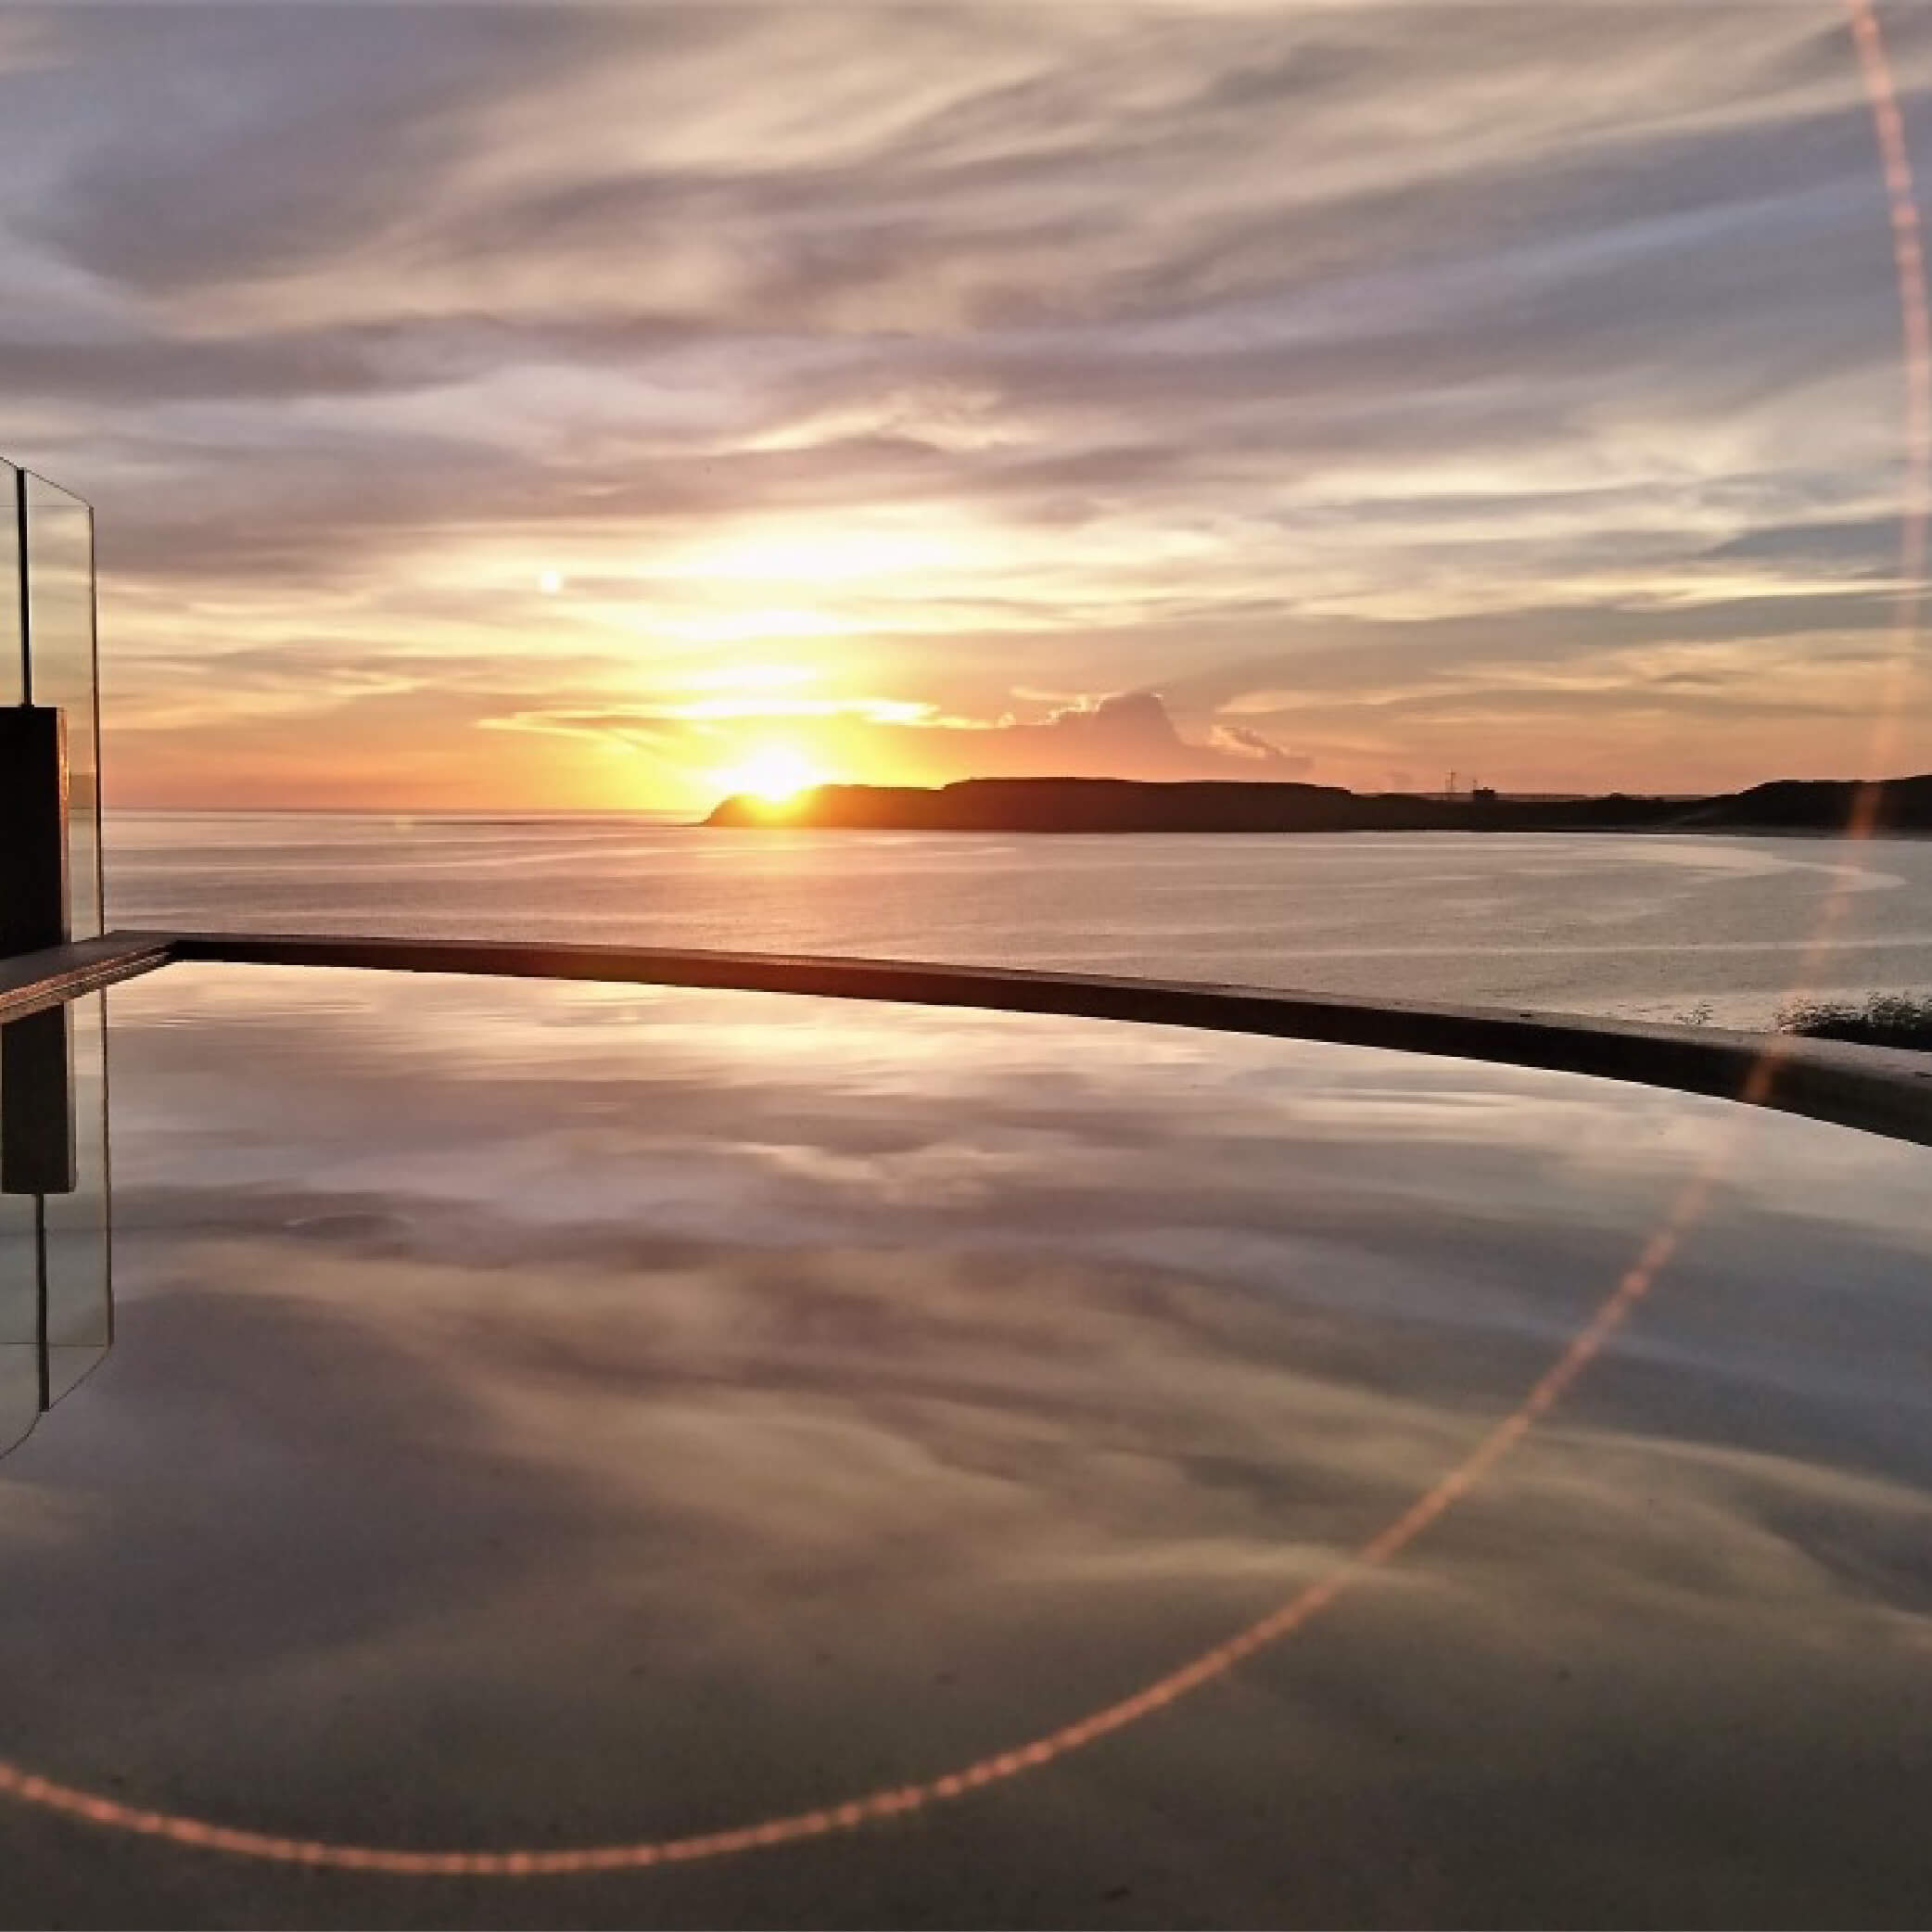 Sunlife晨居的品牌BYREDO 和 KARL LAGERFELD是那。故事水岸莊園精選的飯店沐浴備品, 莊園座落於澎湖本島南方寧靜的海灘旁。